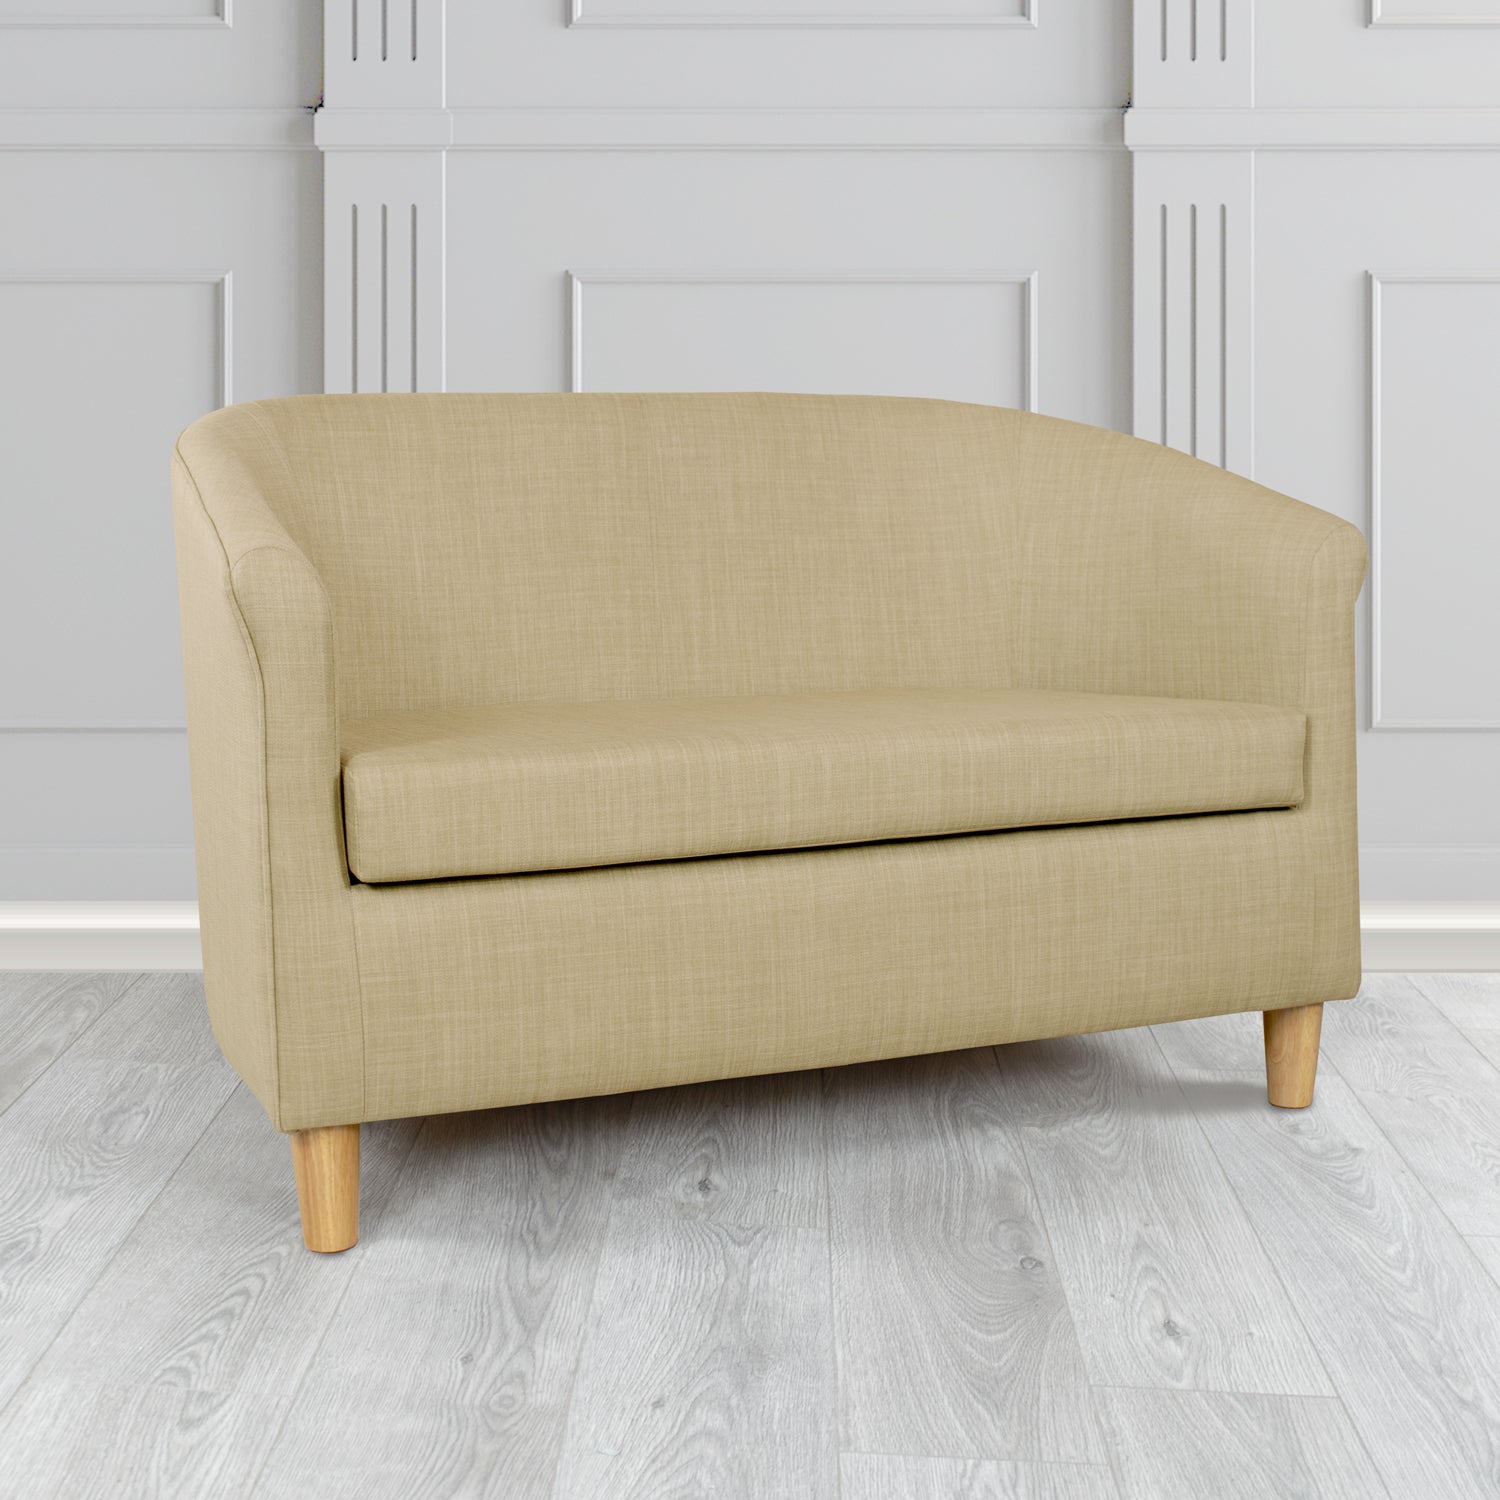 Tuscany Charles Mink Plain Linen Fabric 2 Seater Tub Sofa - The Tub Chair Shop